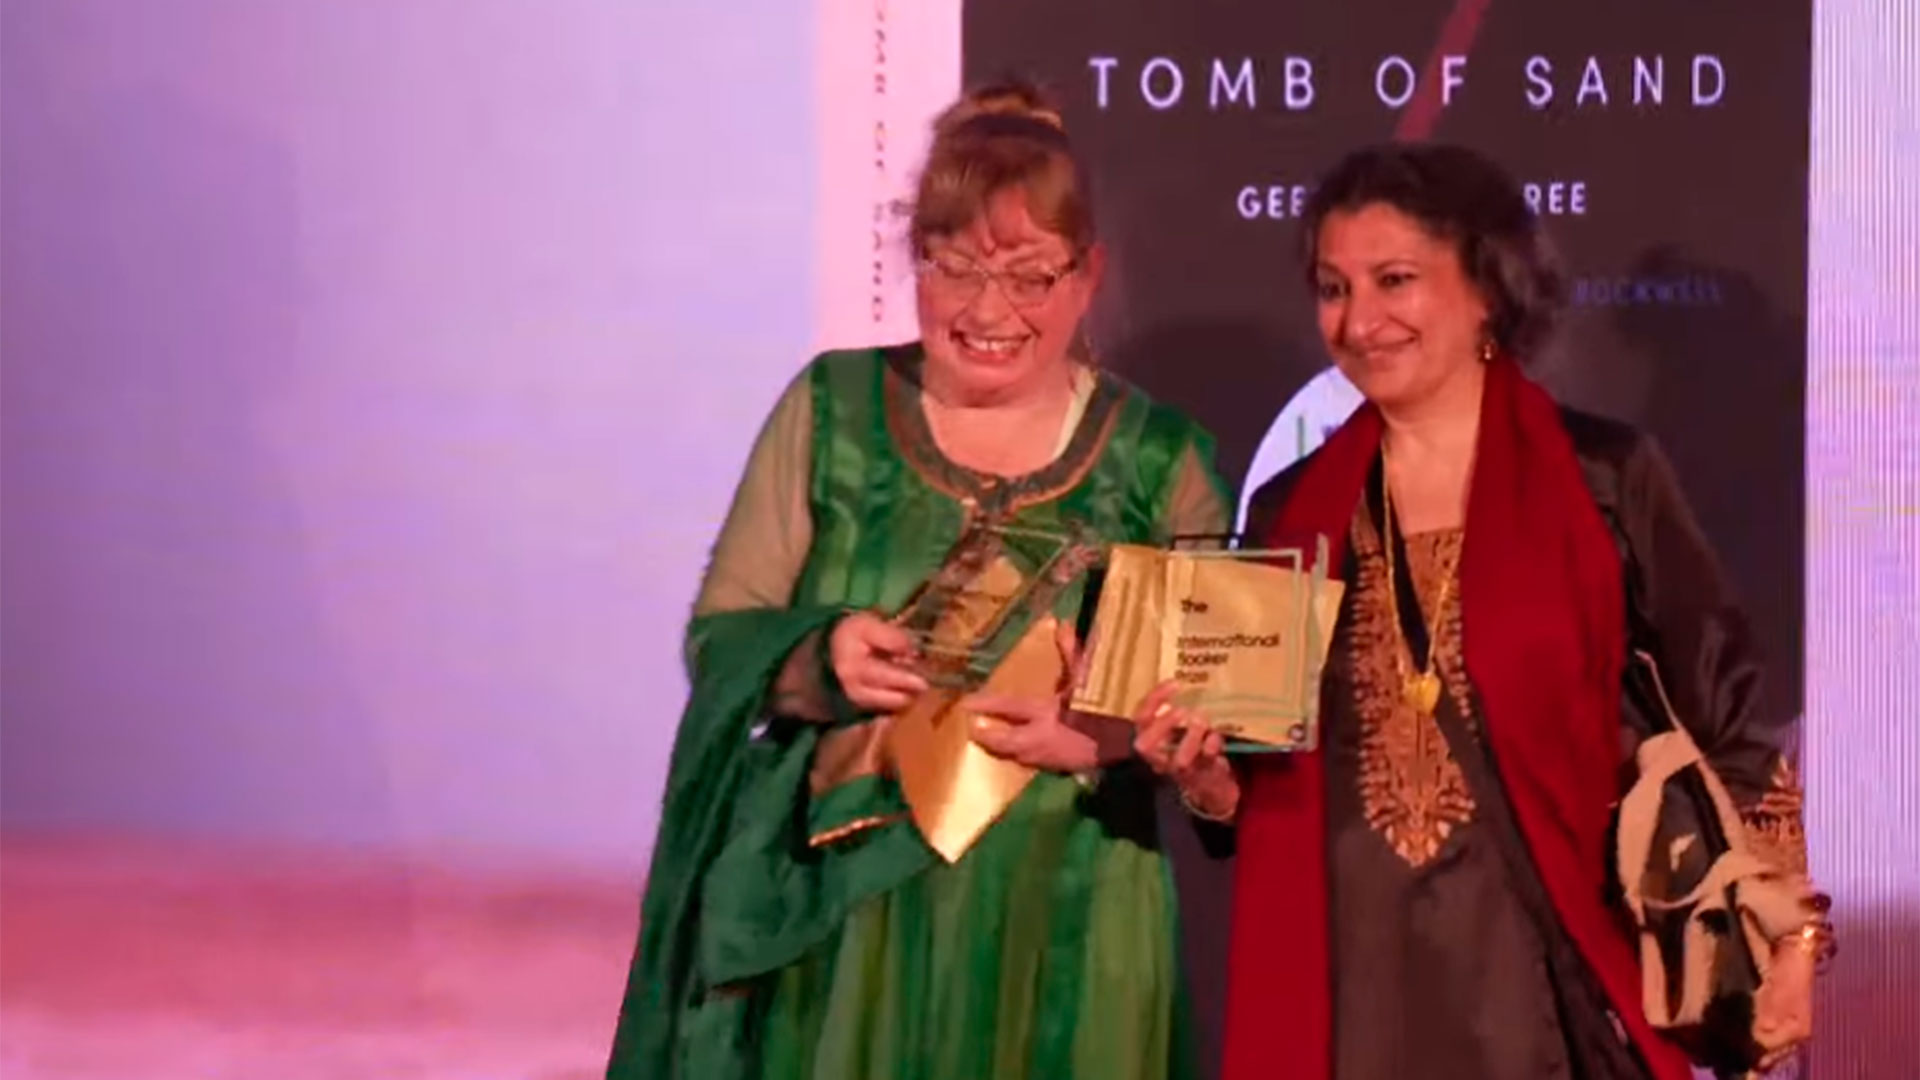 La traductora Daisy Rockwell y la novelista Geetanjali Shree, ambas ganadoras